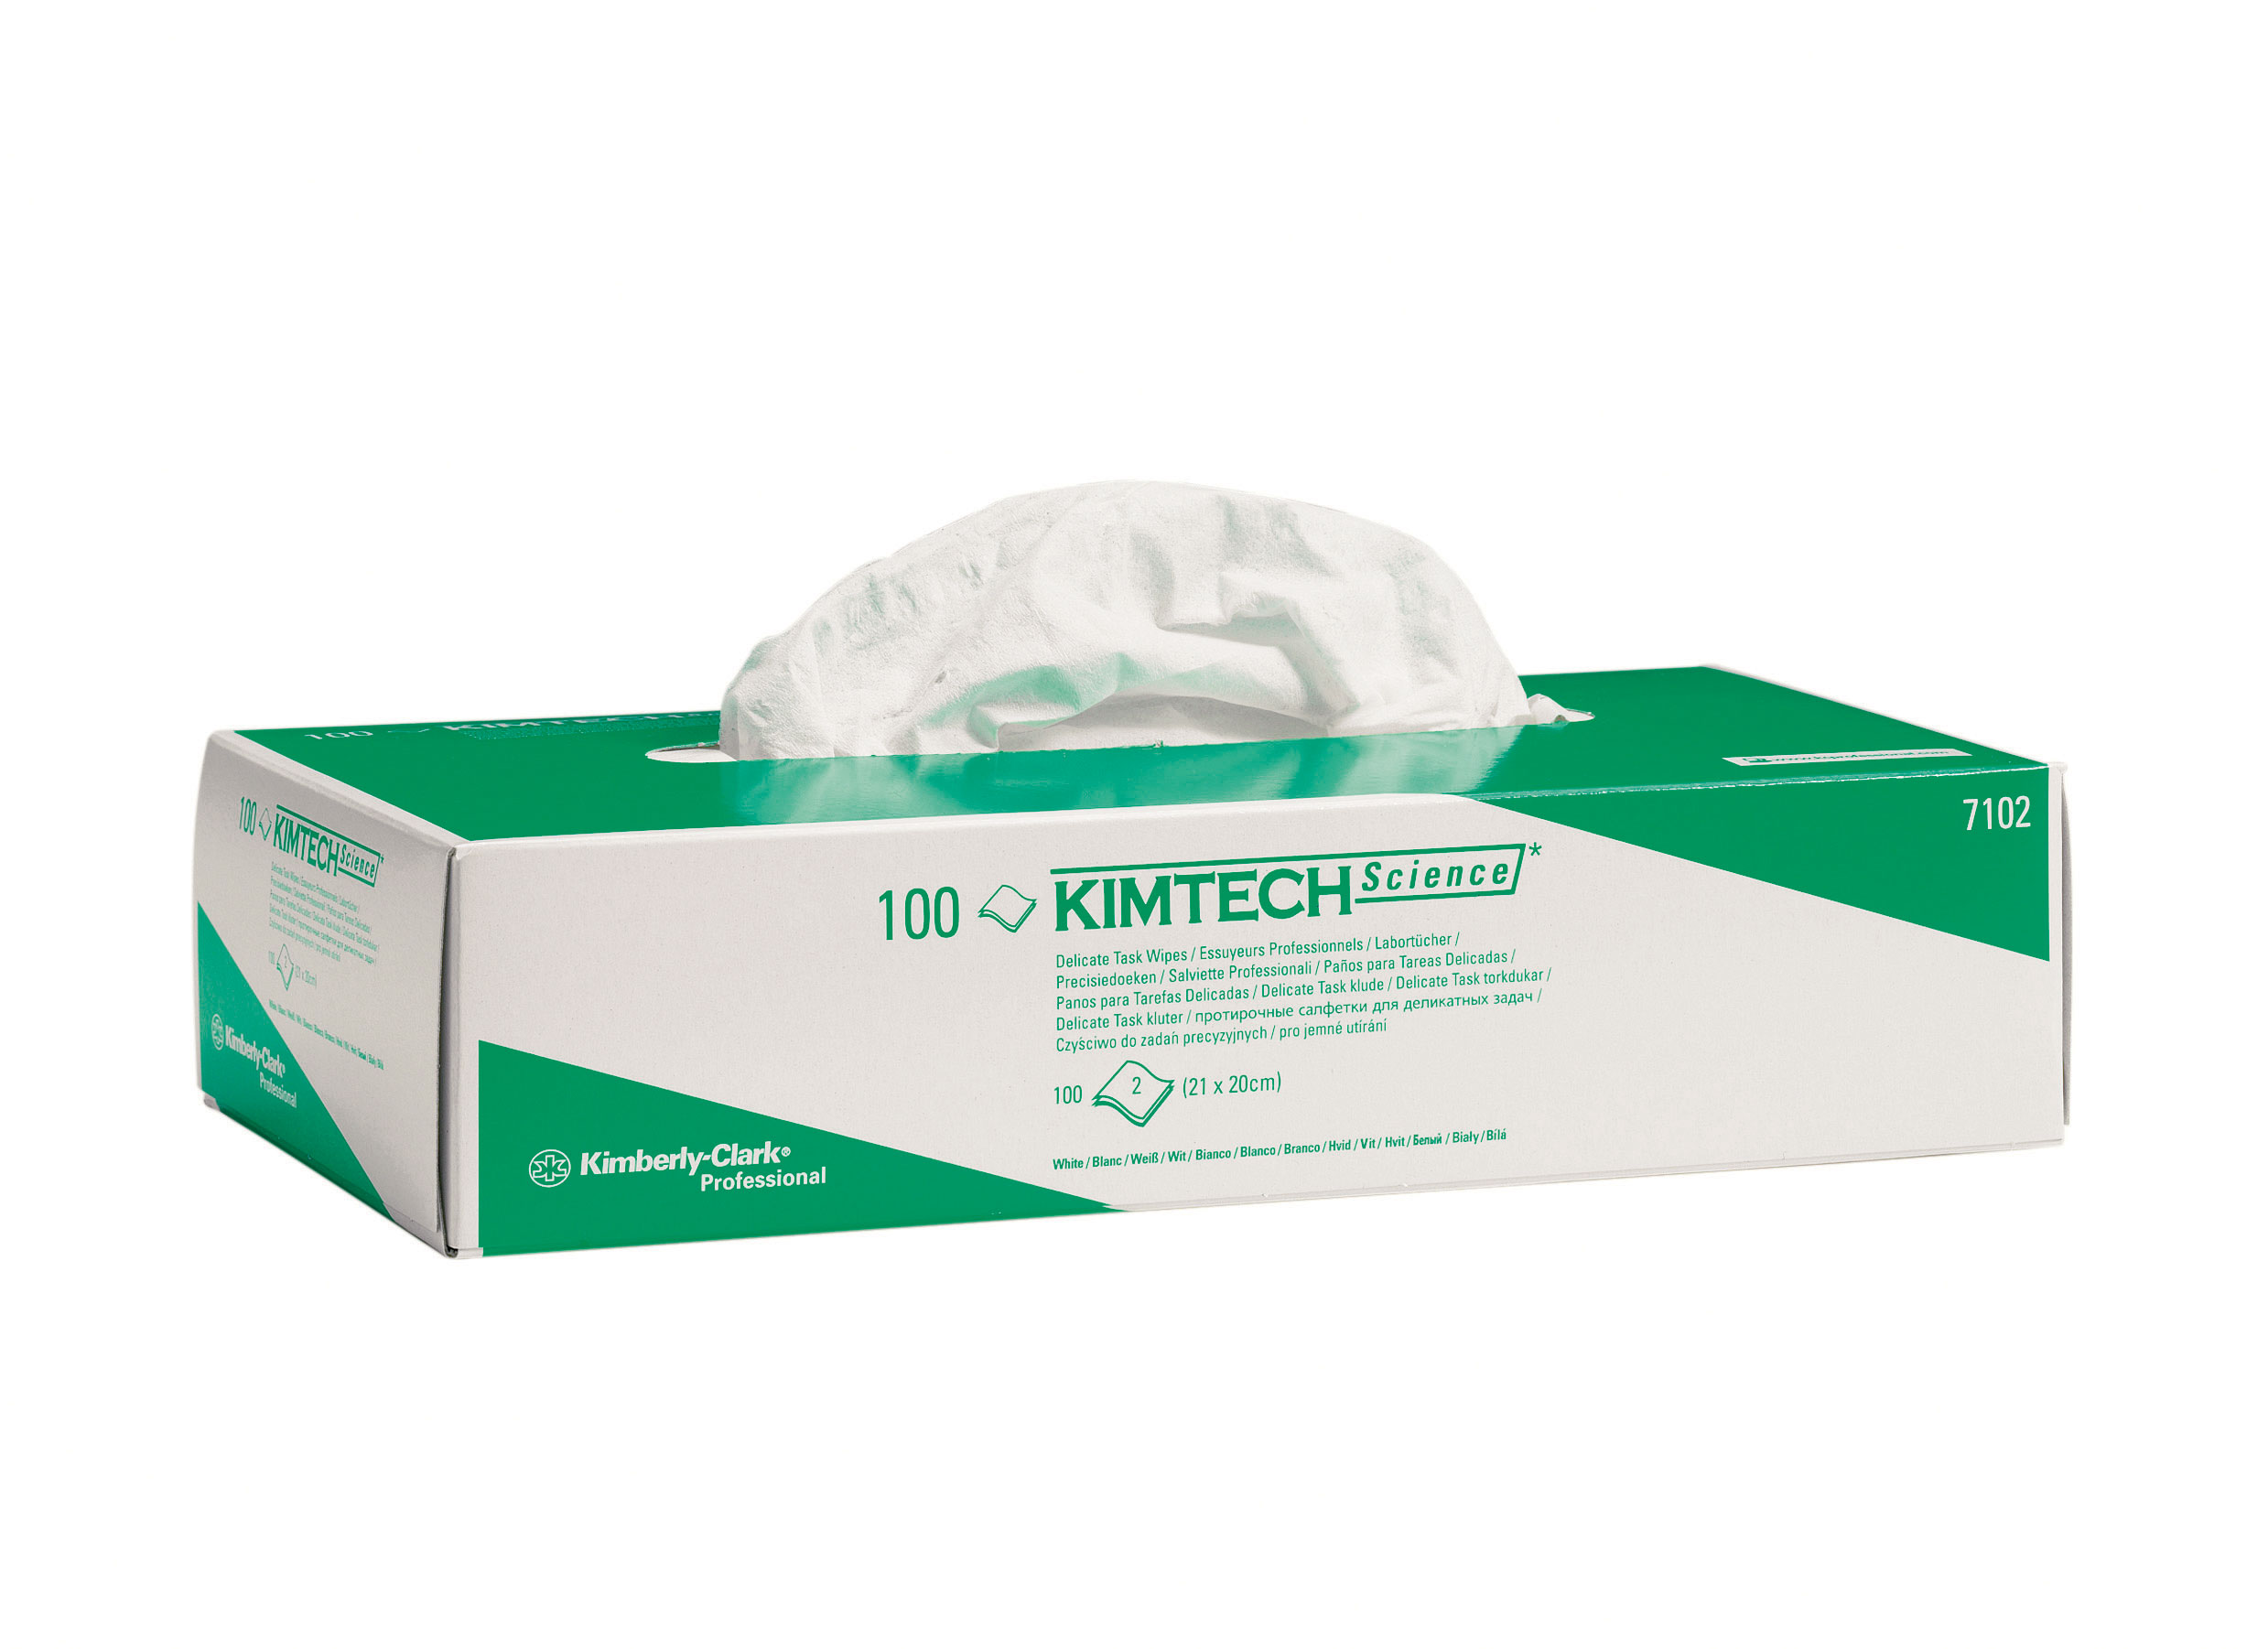 Low Lint Tissues, Kleenex Professional, 220 x 210mm, 2 ply (Per box of 100 wipes)